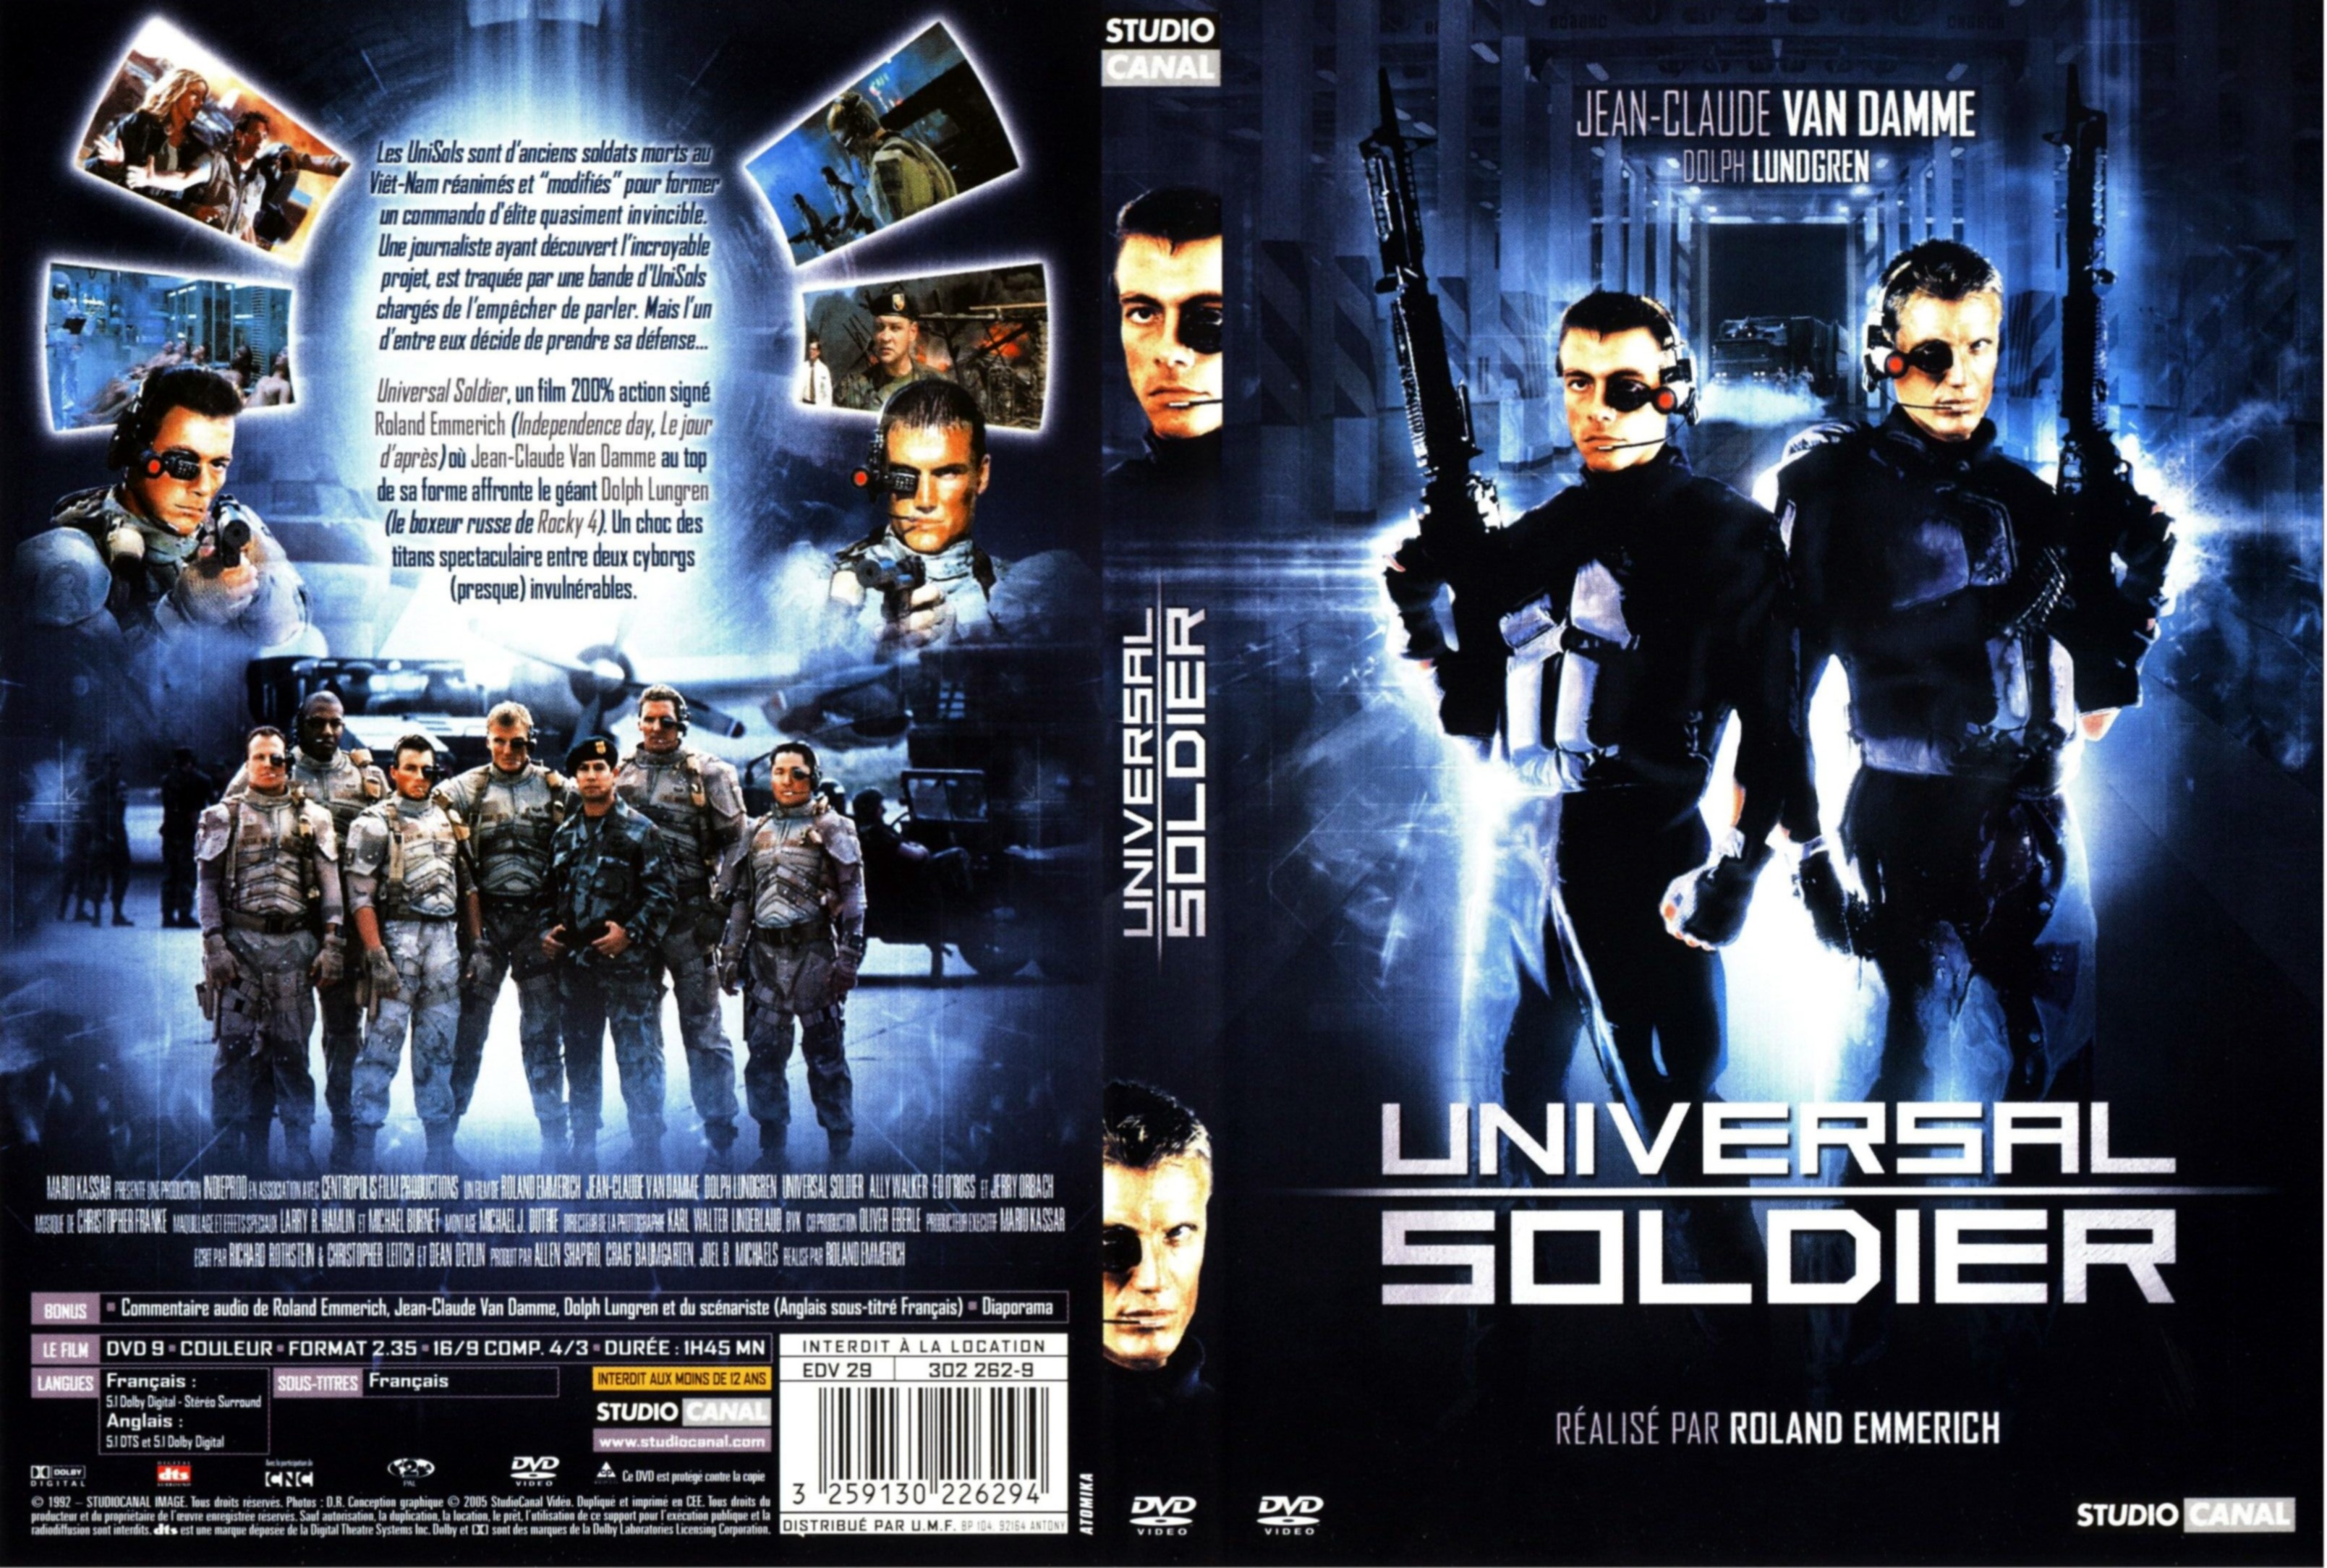 Jaquette DVD Universal soldier v3